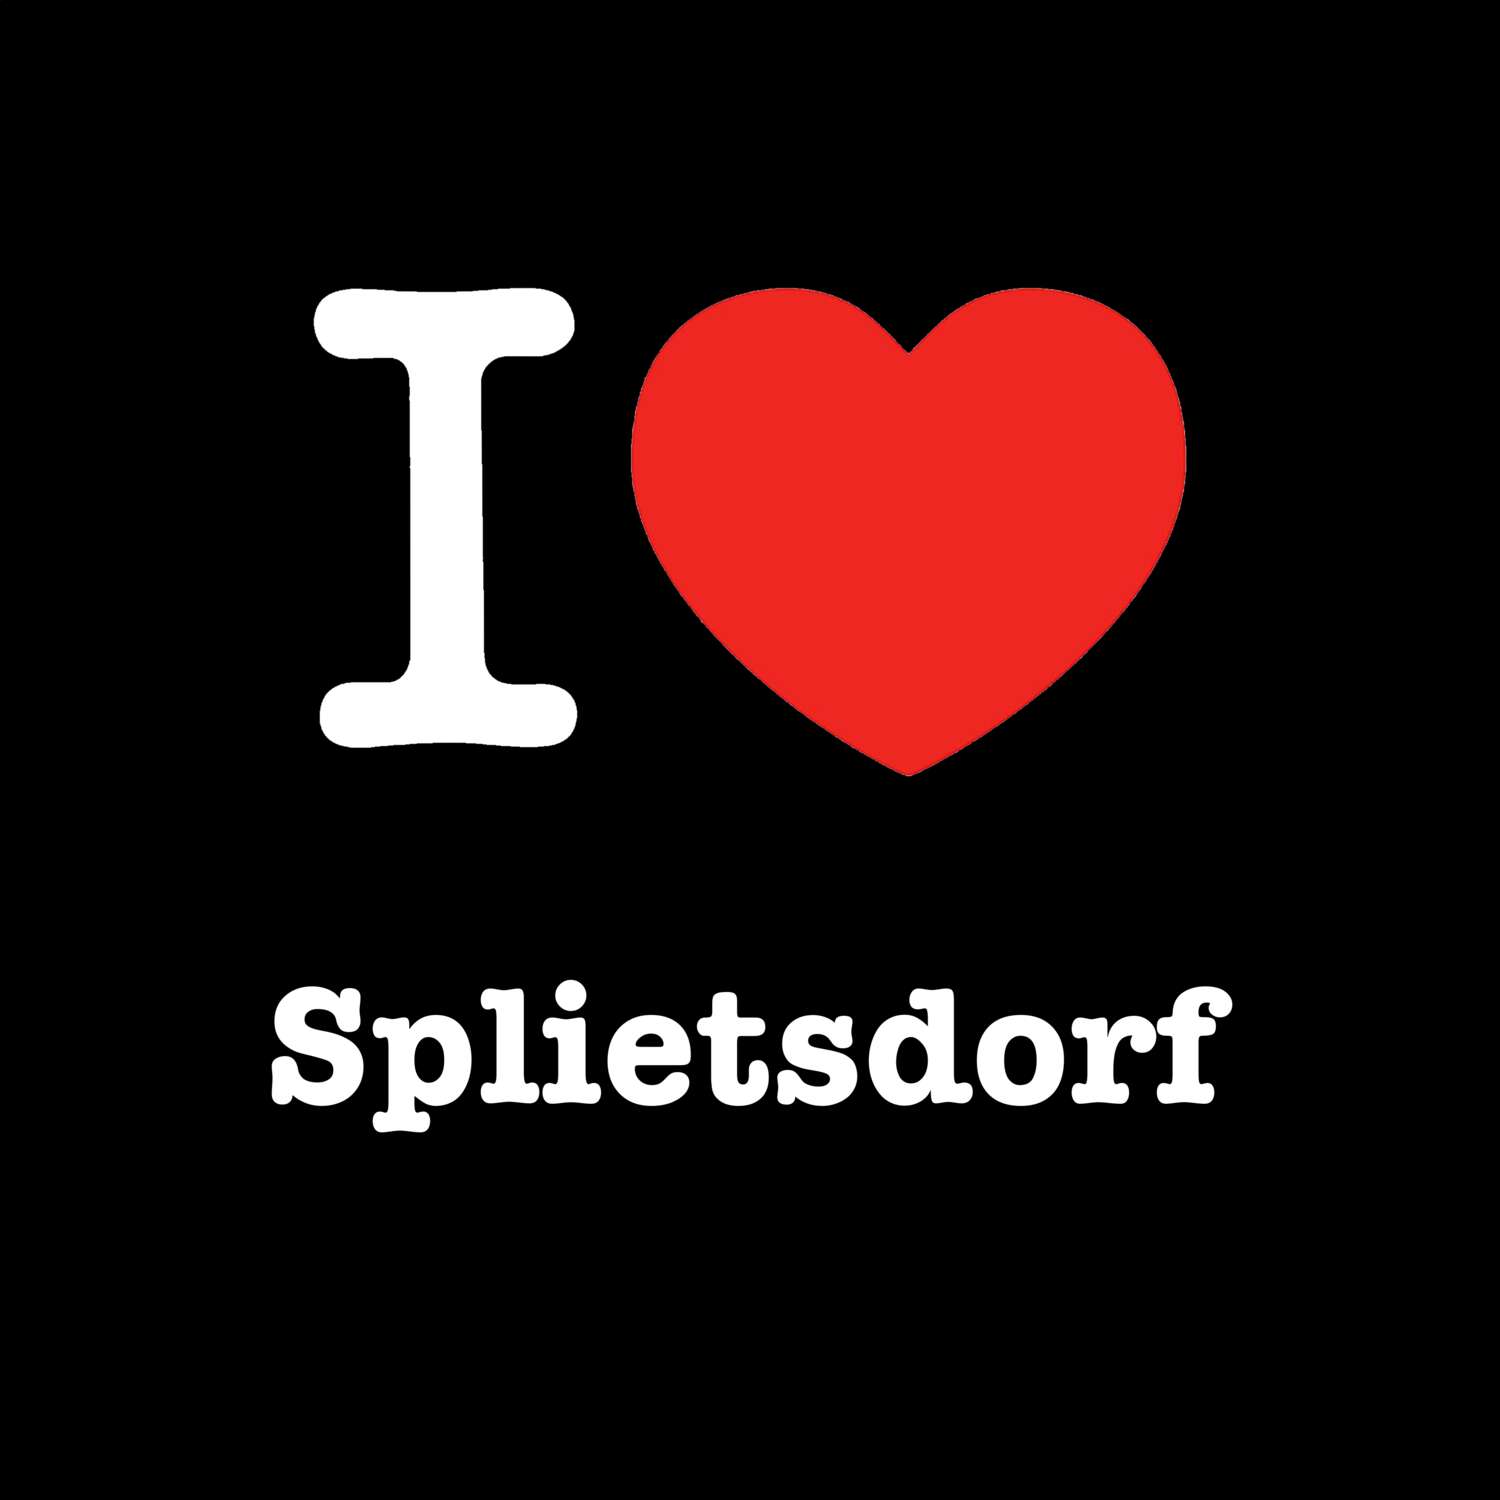 Splietsdorf T-Shirt »I love«